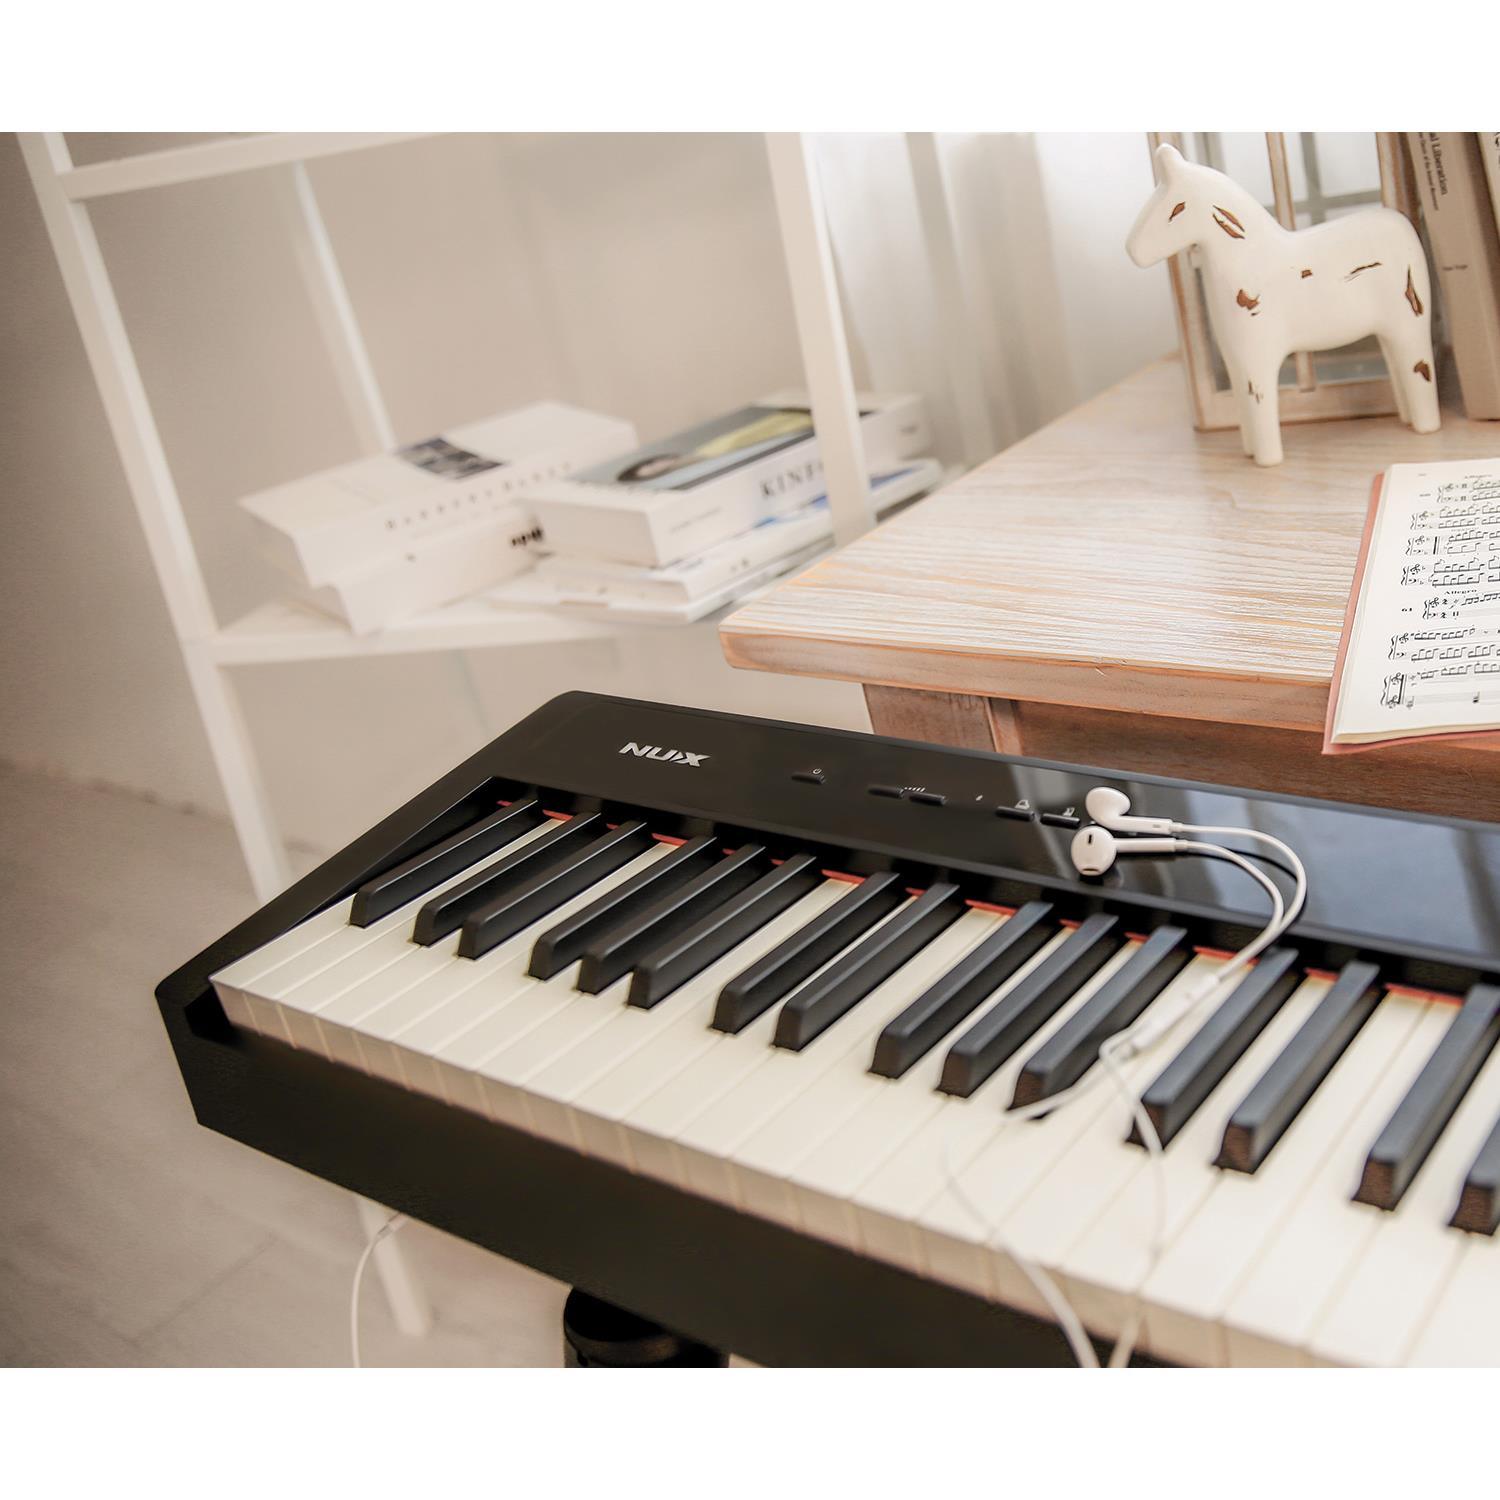 NUX NPK-10 Portable Digital Piano - DY Pro Audio